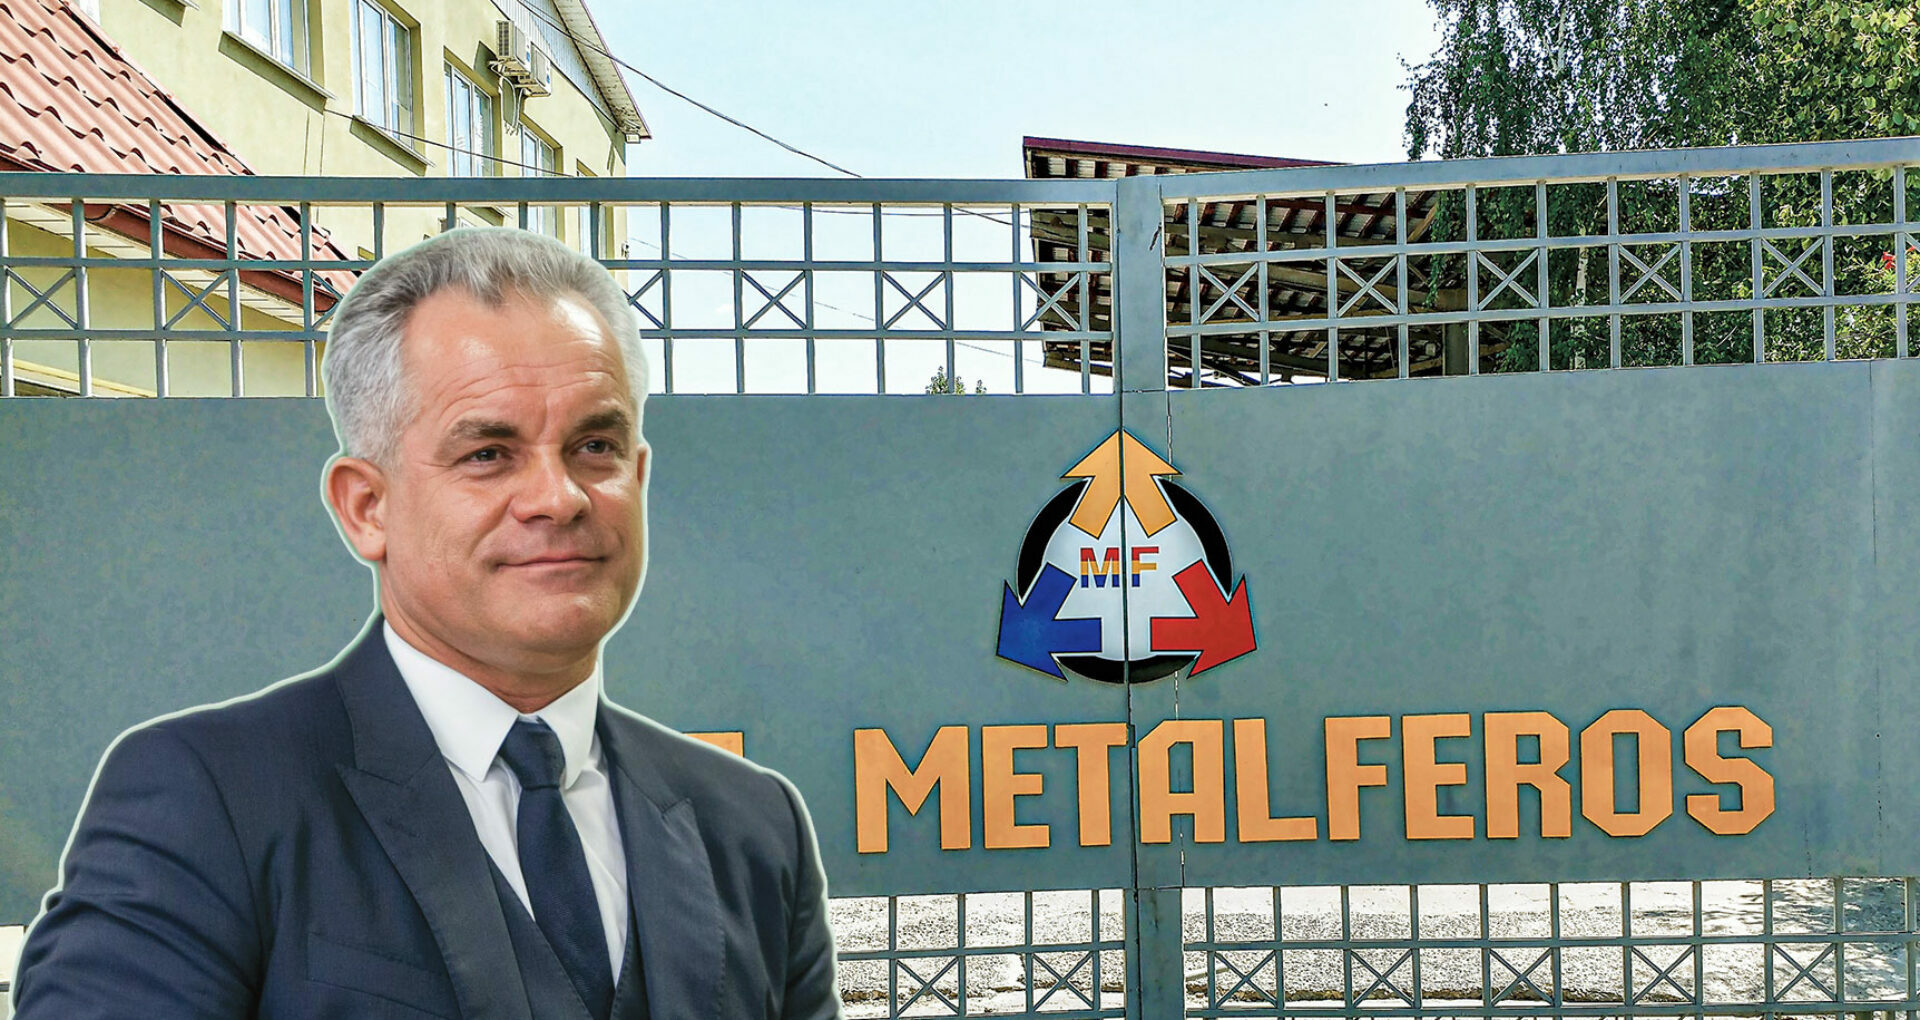 Prosecutors Confirm Vladimir Plahotniuc’s Involvement in Metalferos Case